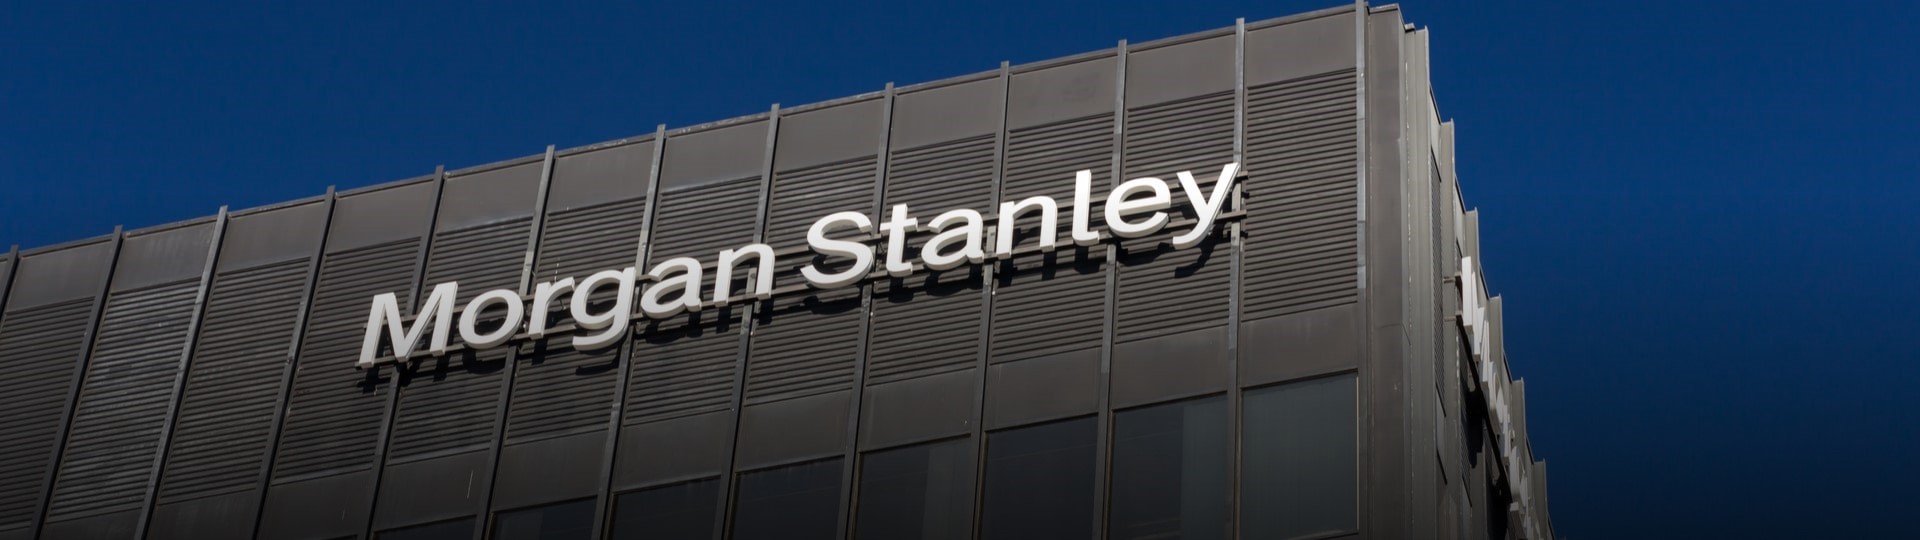 Banka Morgan Stanley umožní investice do bitcoinu